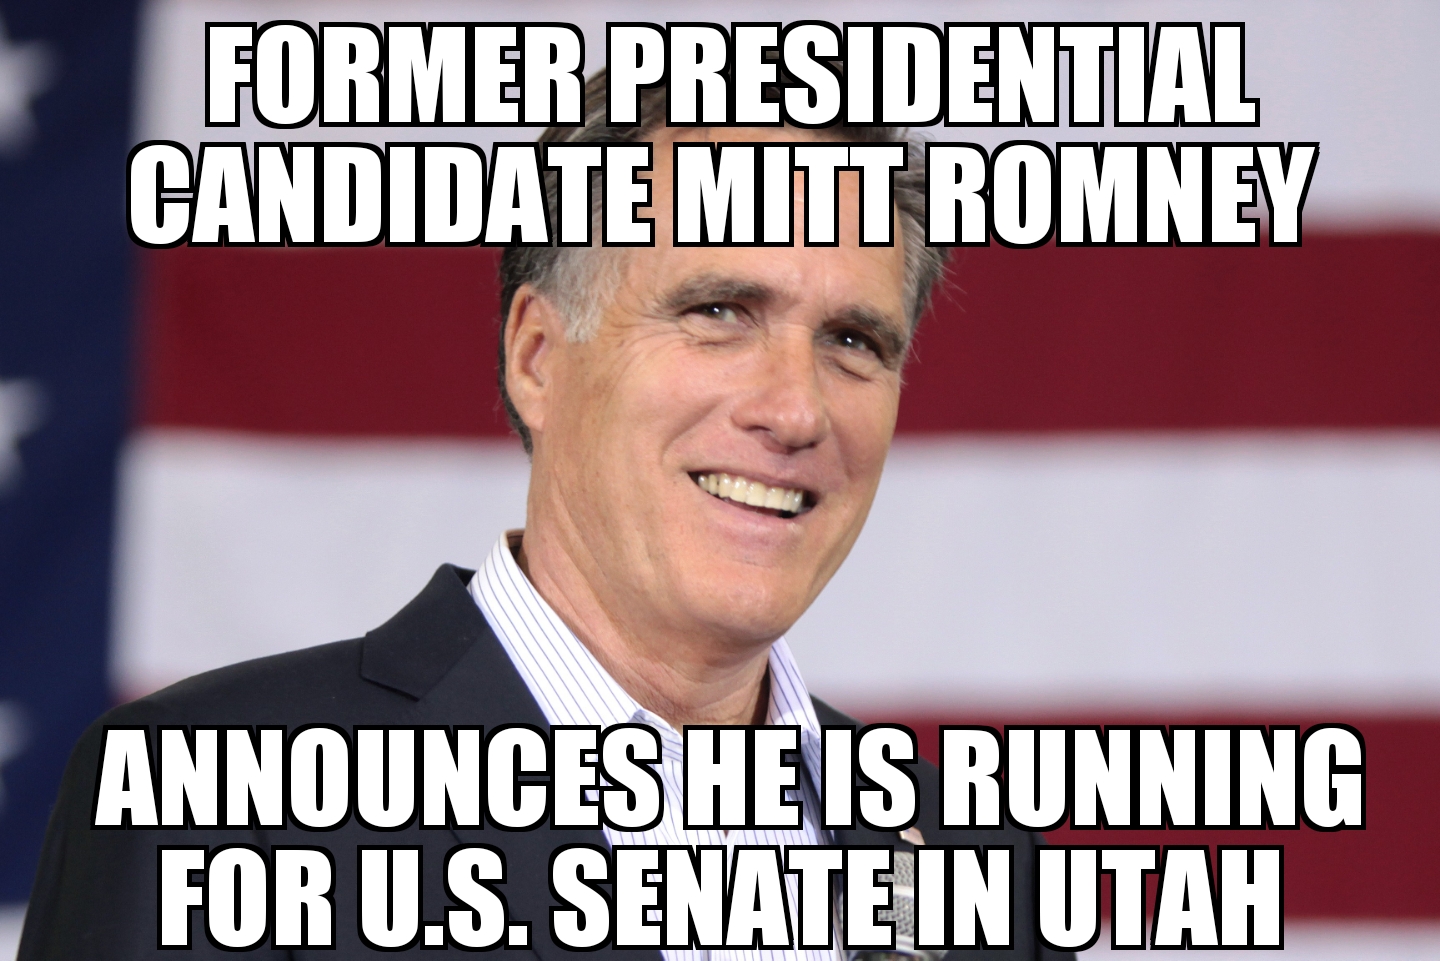 Mitt Romney to run for U.S. Senate in Utah